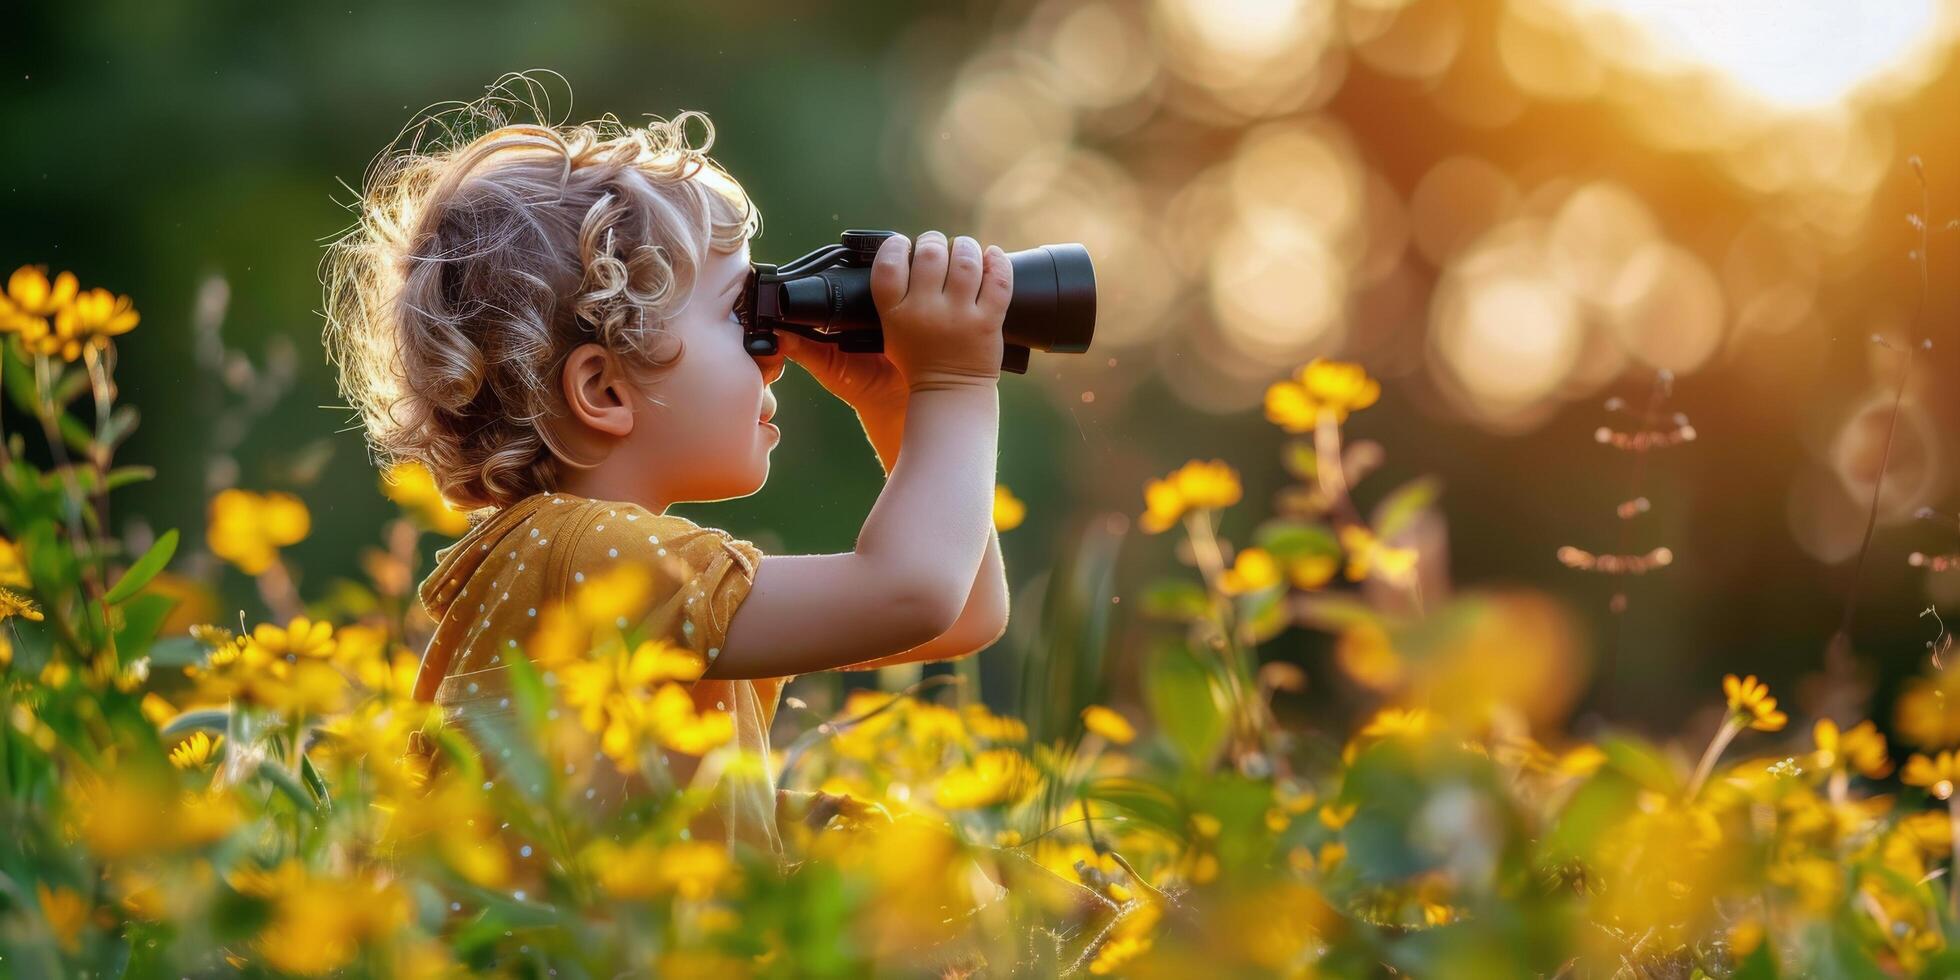 AI generated Little Girl Looking Through Binoculars in Woods photo